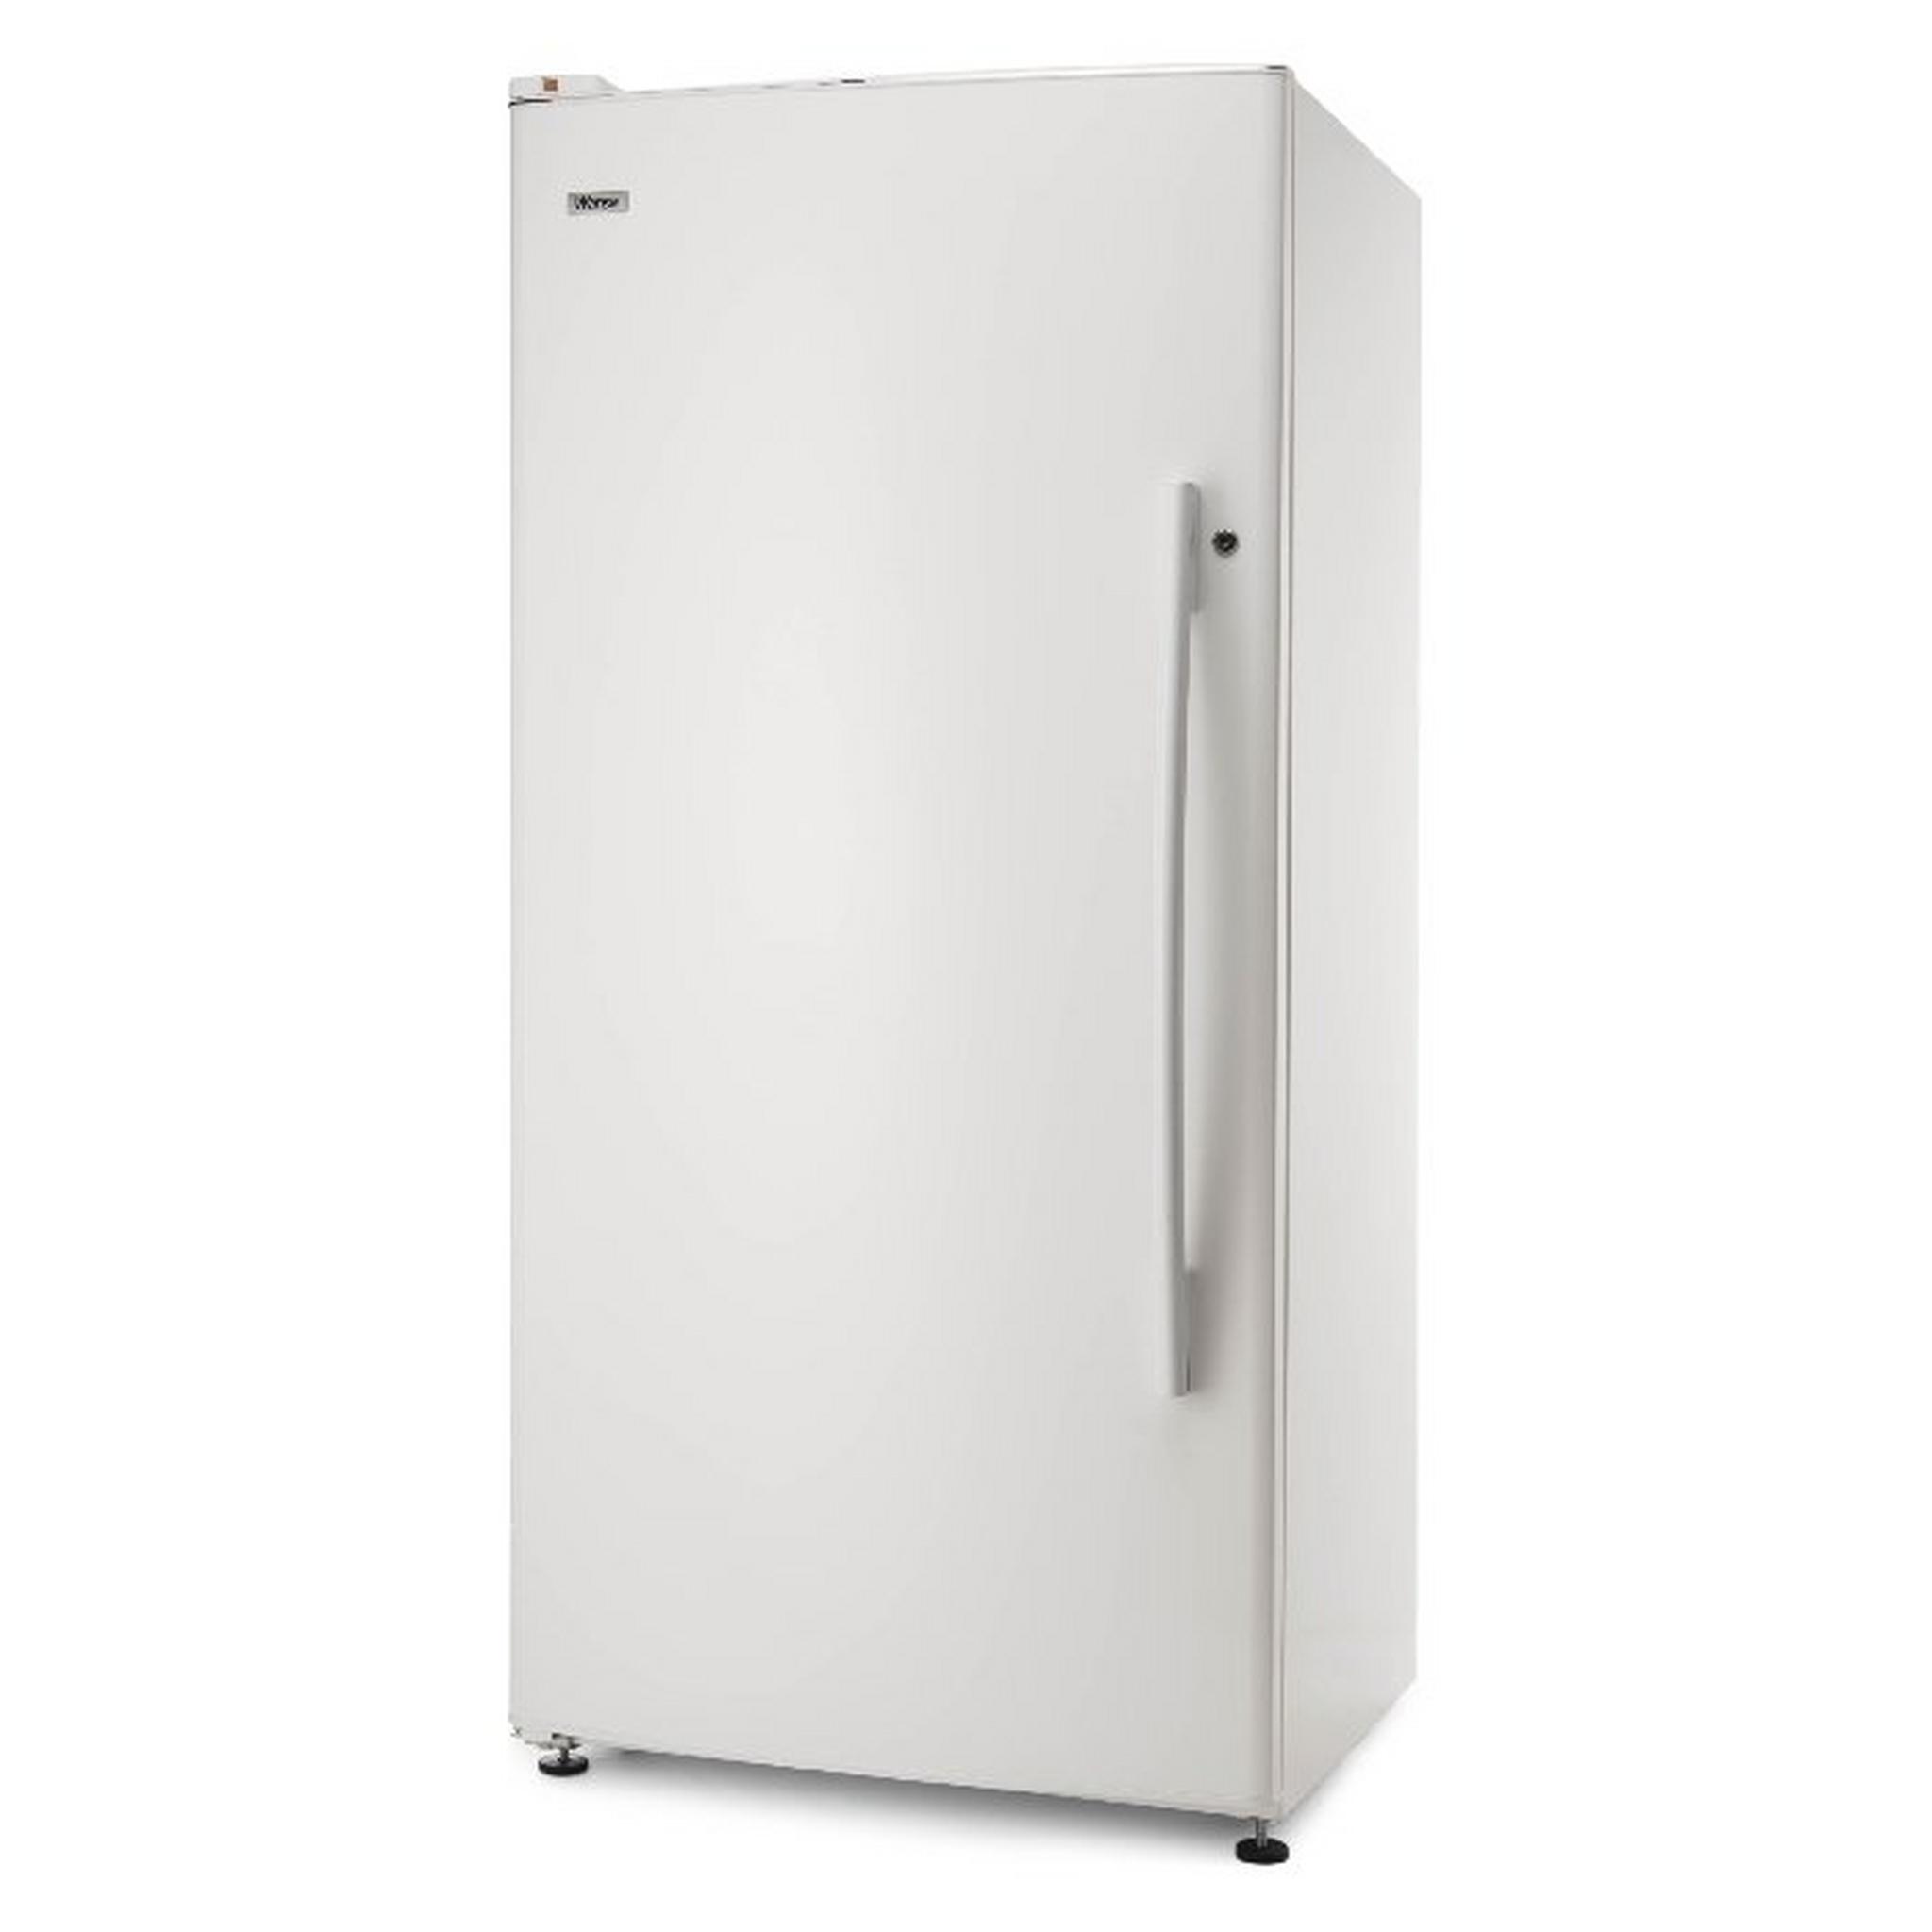 Wansa 19CFT Single Door Refrigerator (WROW-650-NFWTS3) - White -  Wansa 19CFT Upright Freezer (WUOW-650-NFWTS3) - White